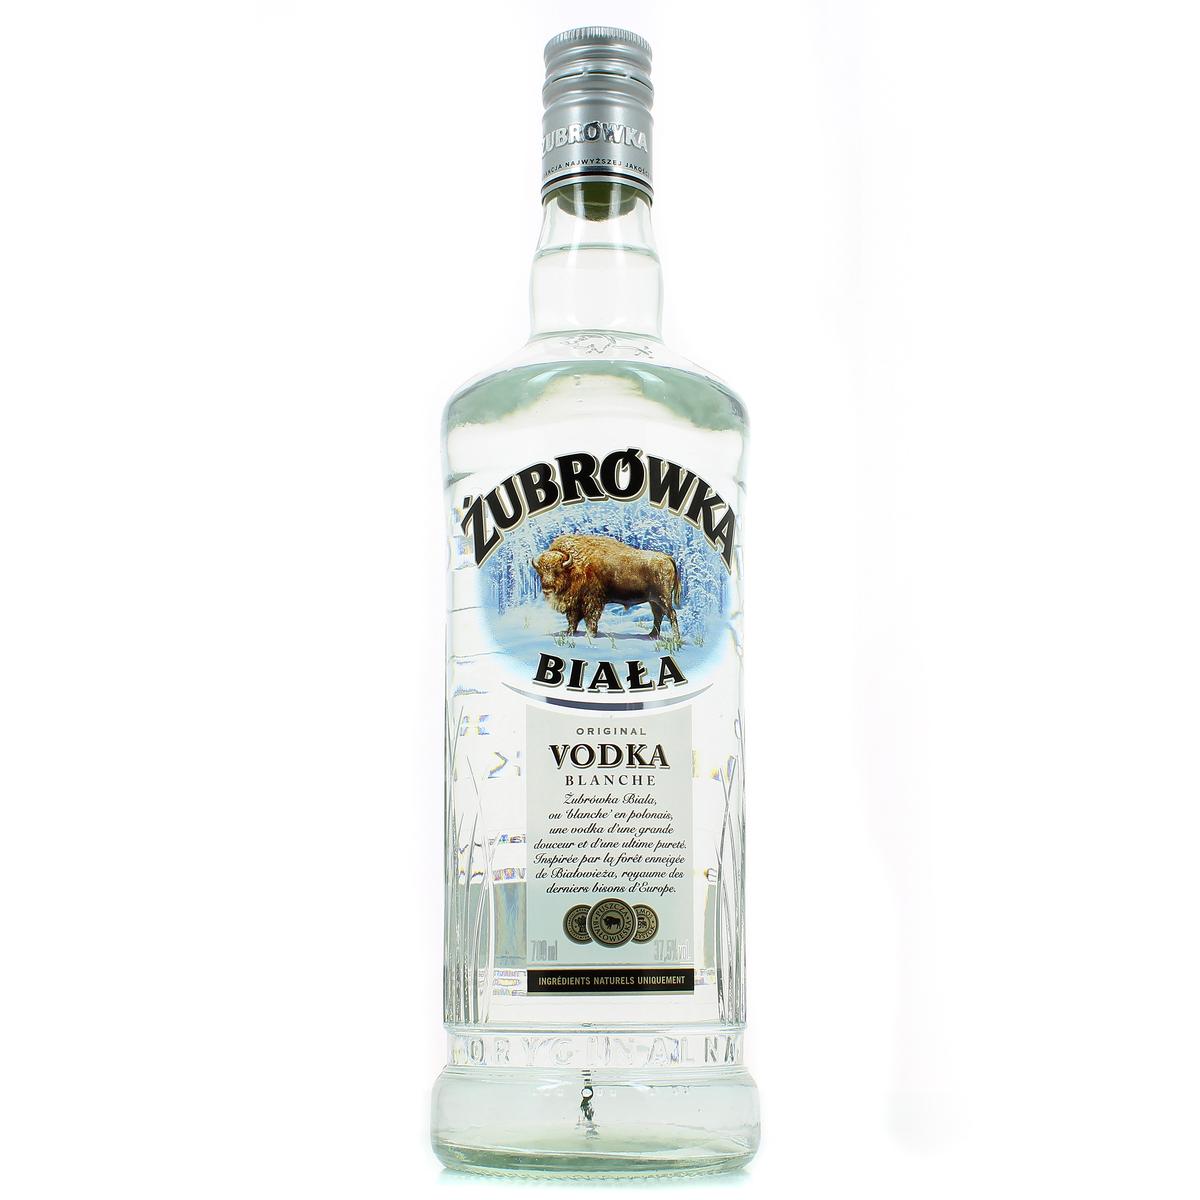 KIEV, UKRAINE - 23 OCTOBRE 2020 : Bouteille De Vodka Zubrowka